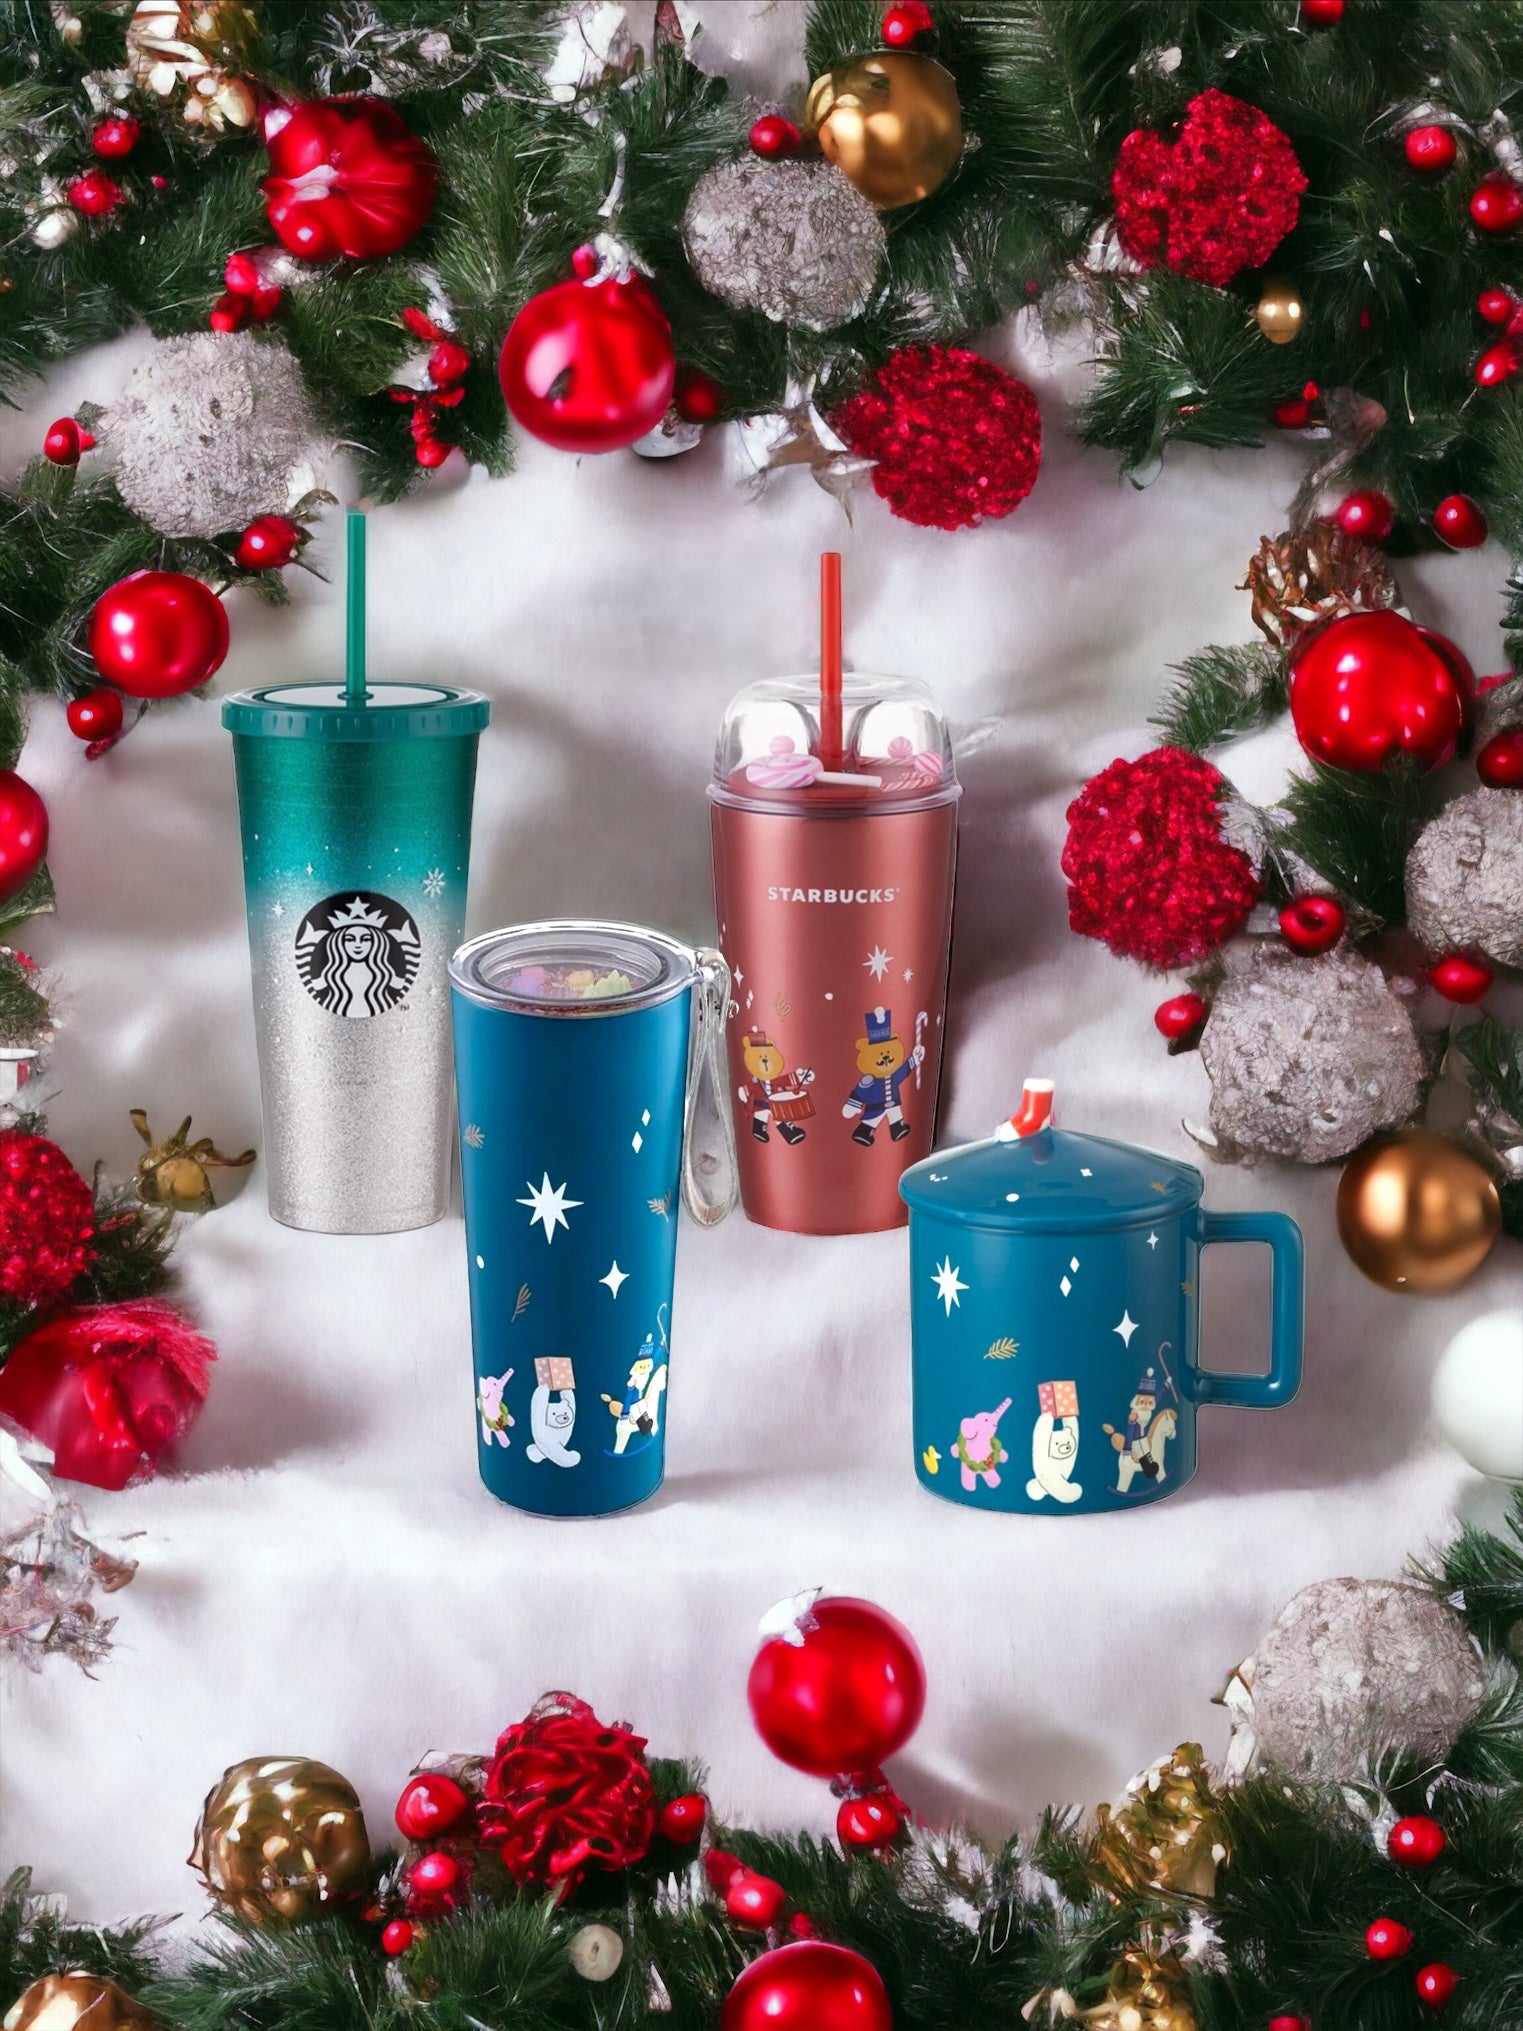 Starbucks Celebrates Christmas With A Nutcracker And Friends